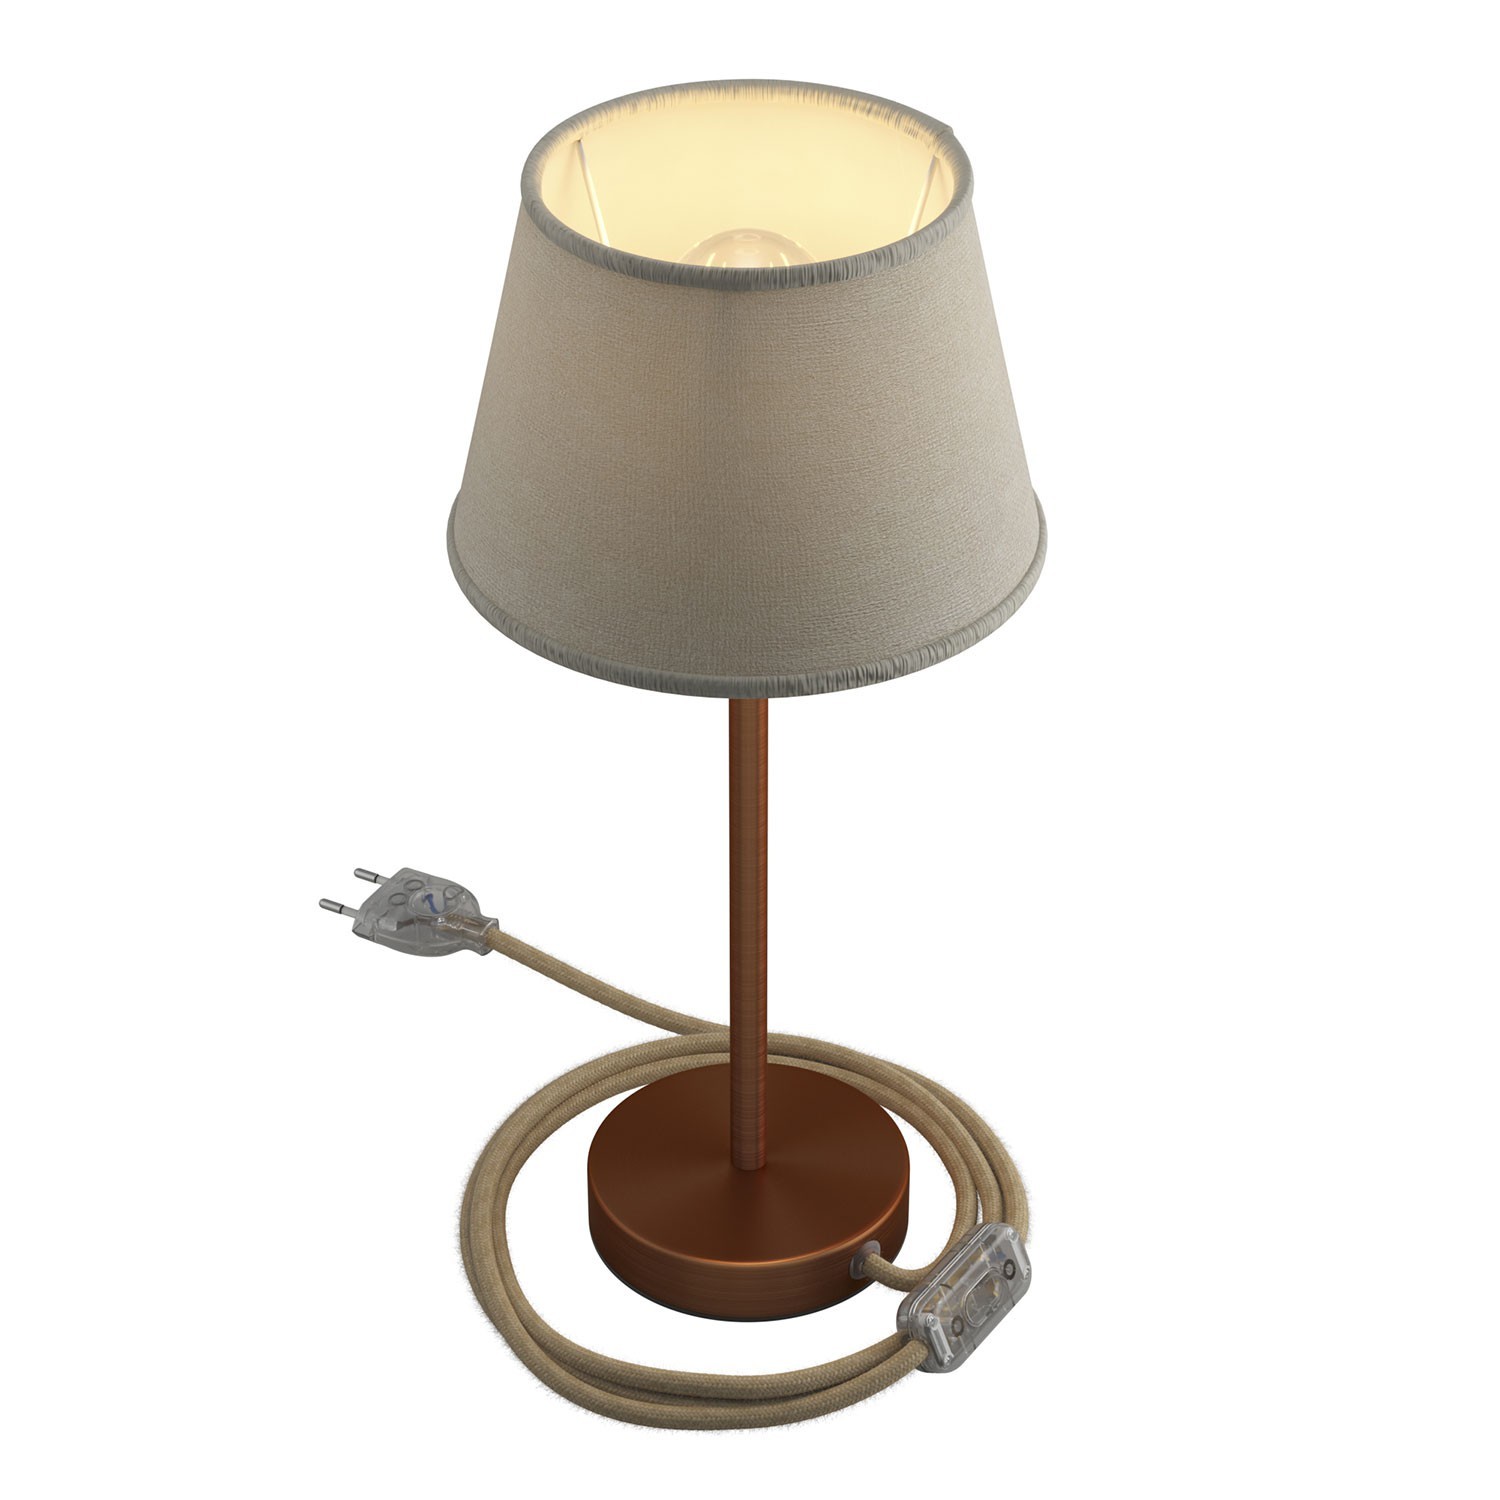 Alzaluce s Impero sjenilom, metalna stolna lampa s utikačem, tekstilnim kabelom i prekidačem